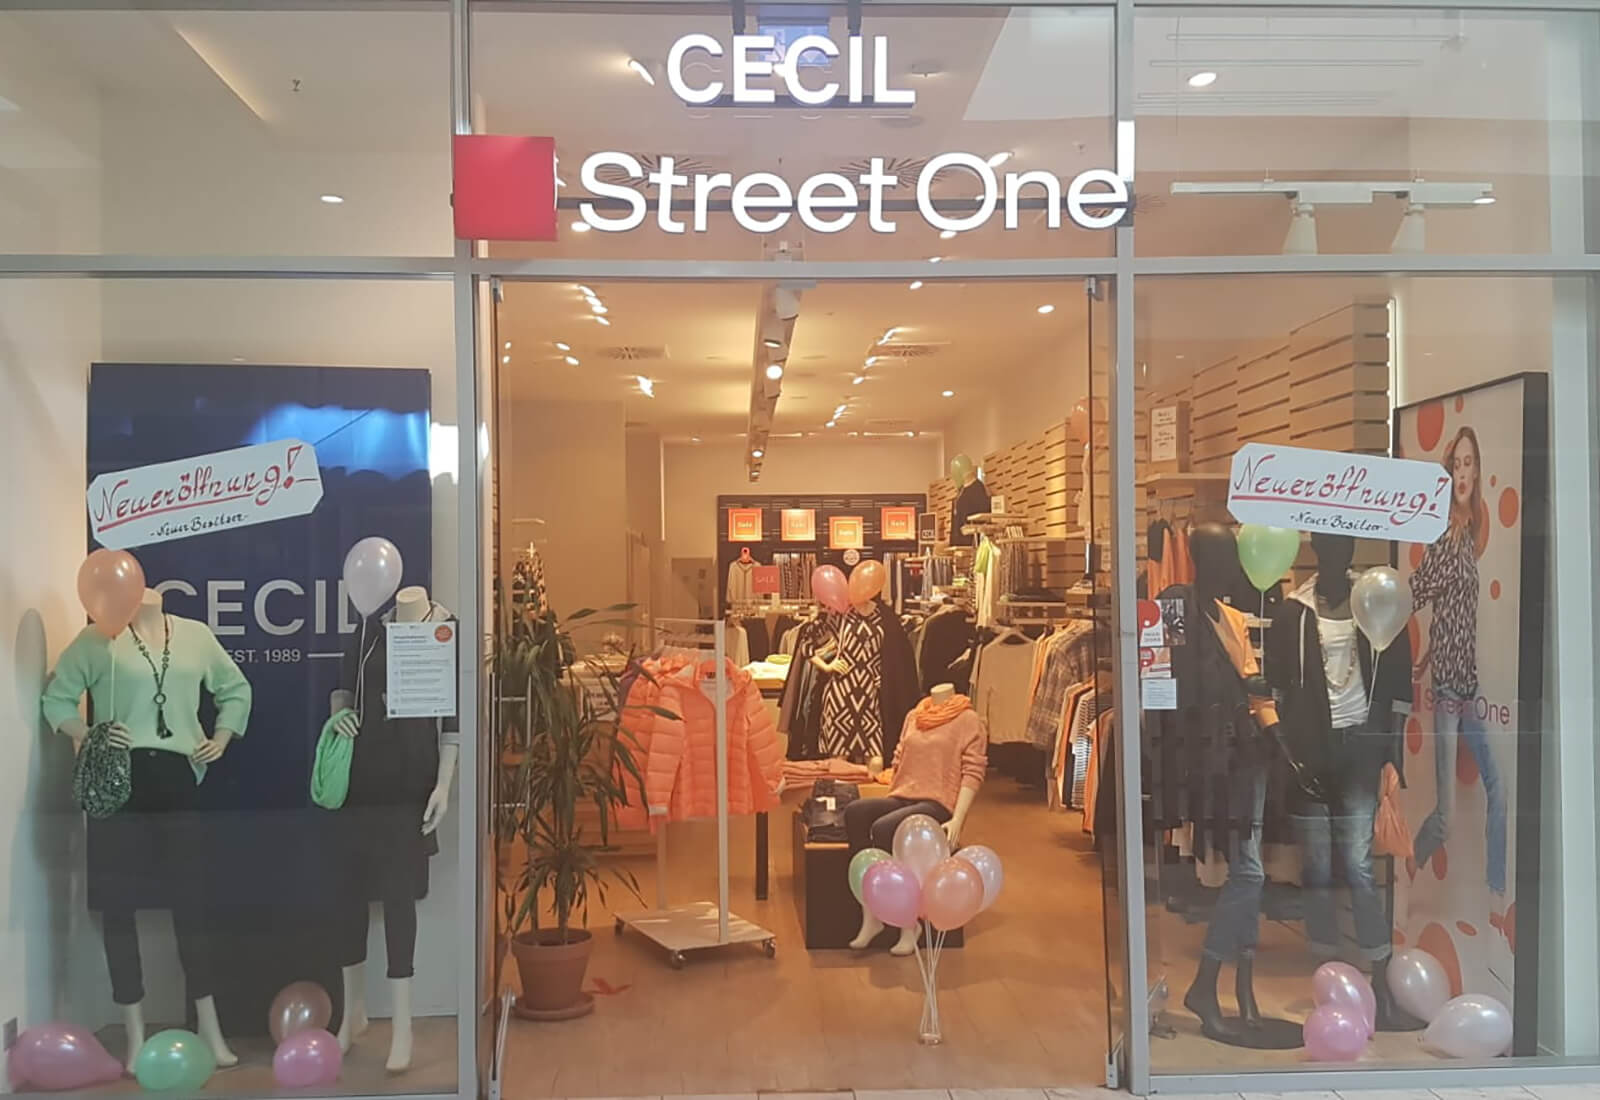 Street One & CECIL